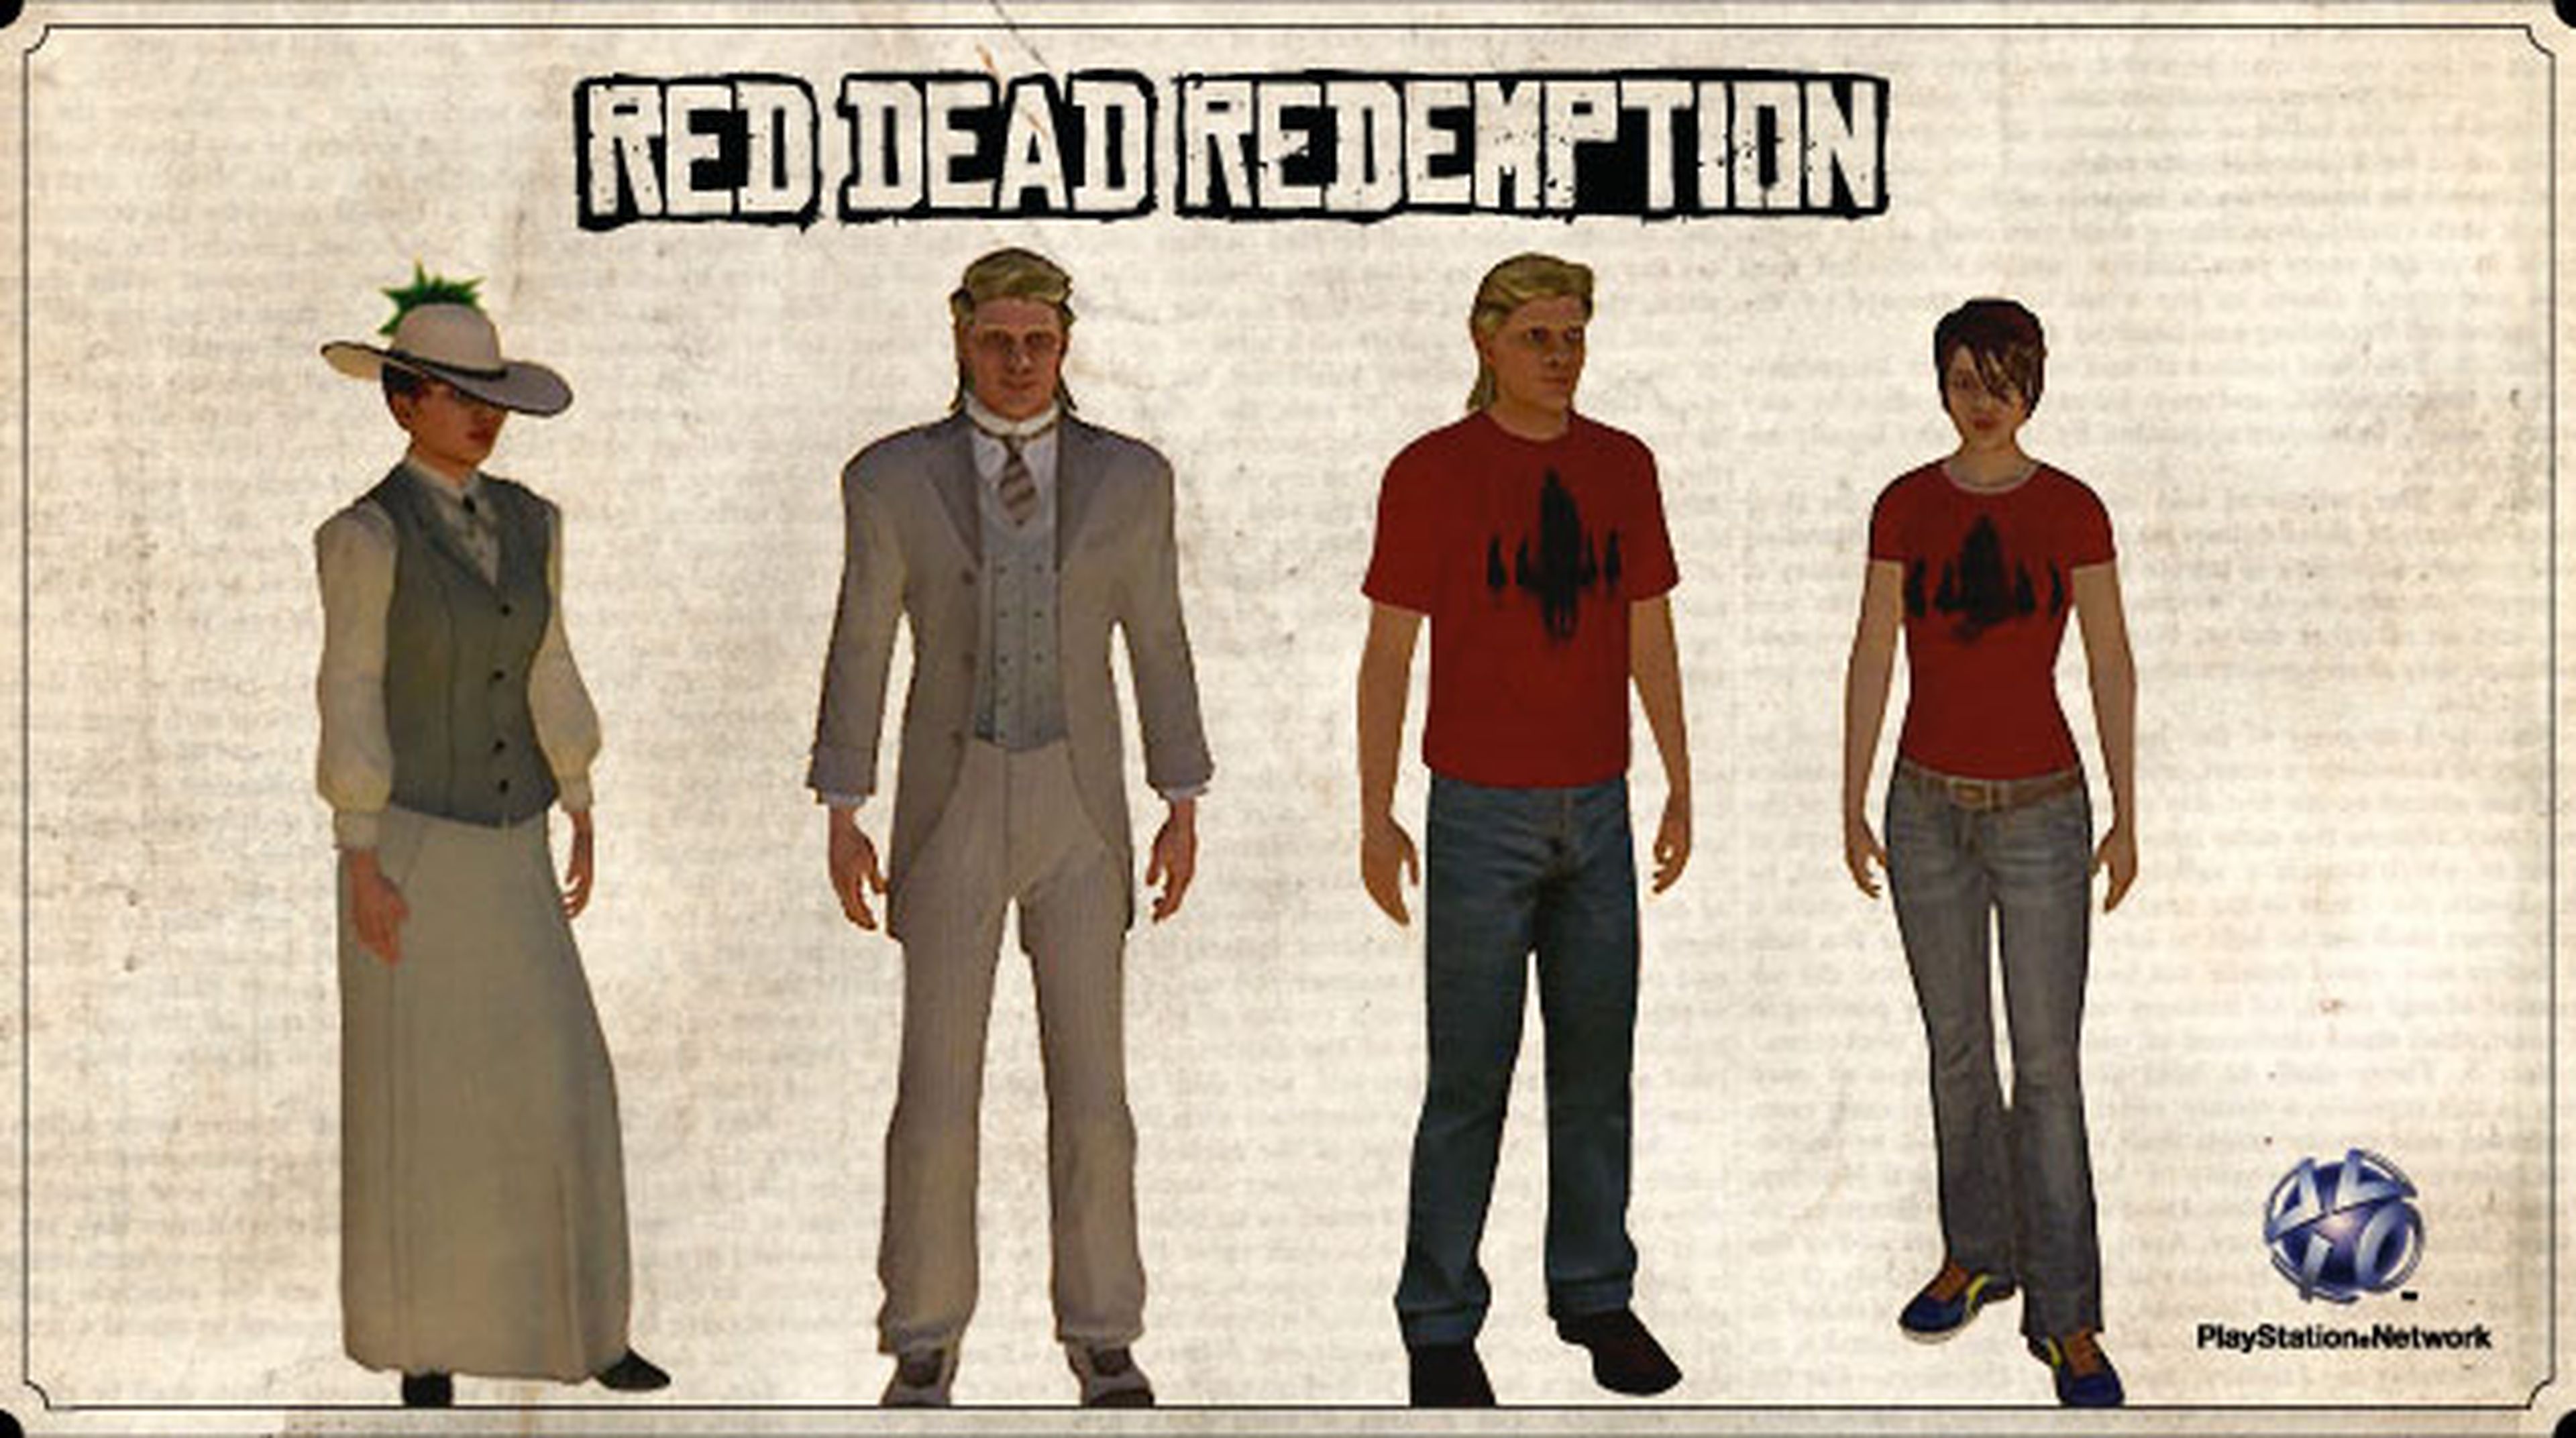 XP Challenge en Red Dead Redemption